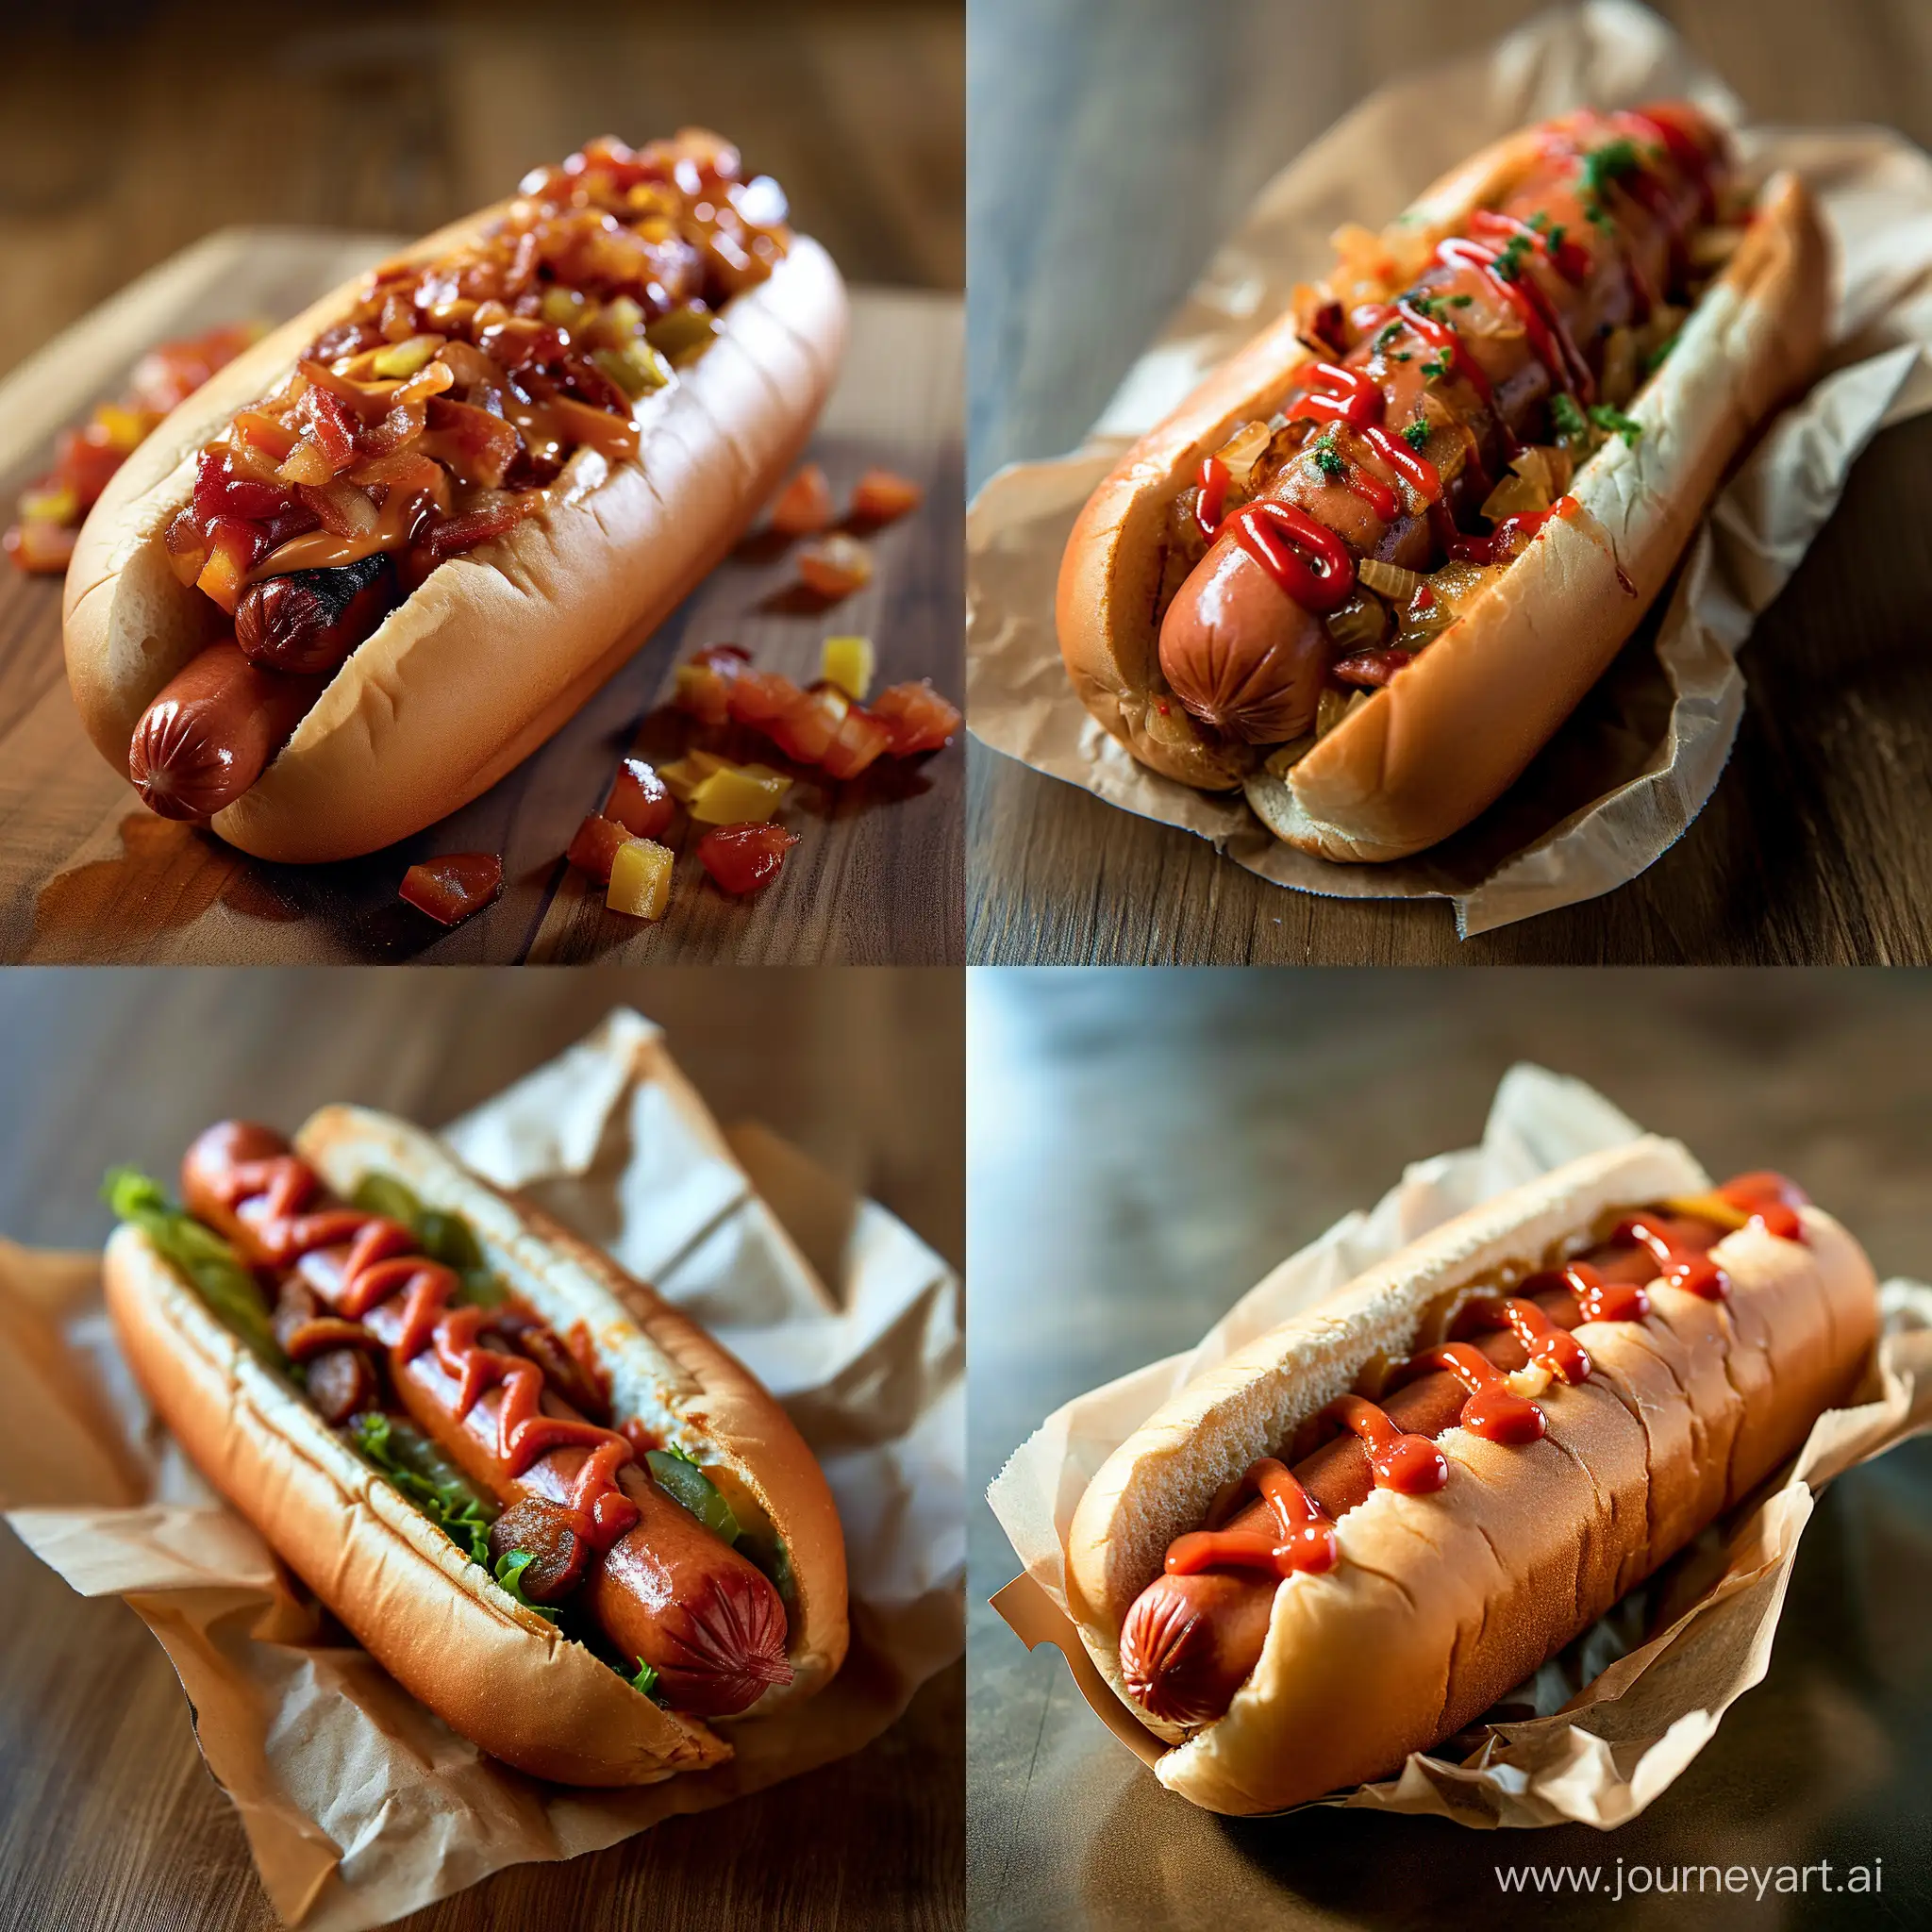 professional food photo of a hot dog